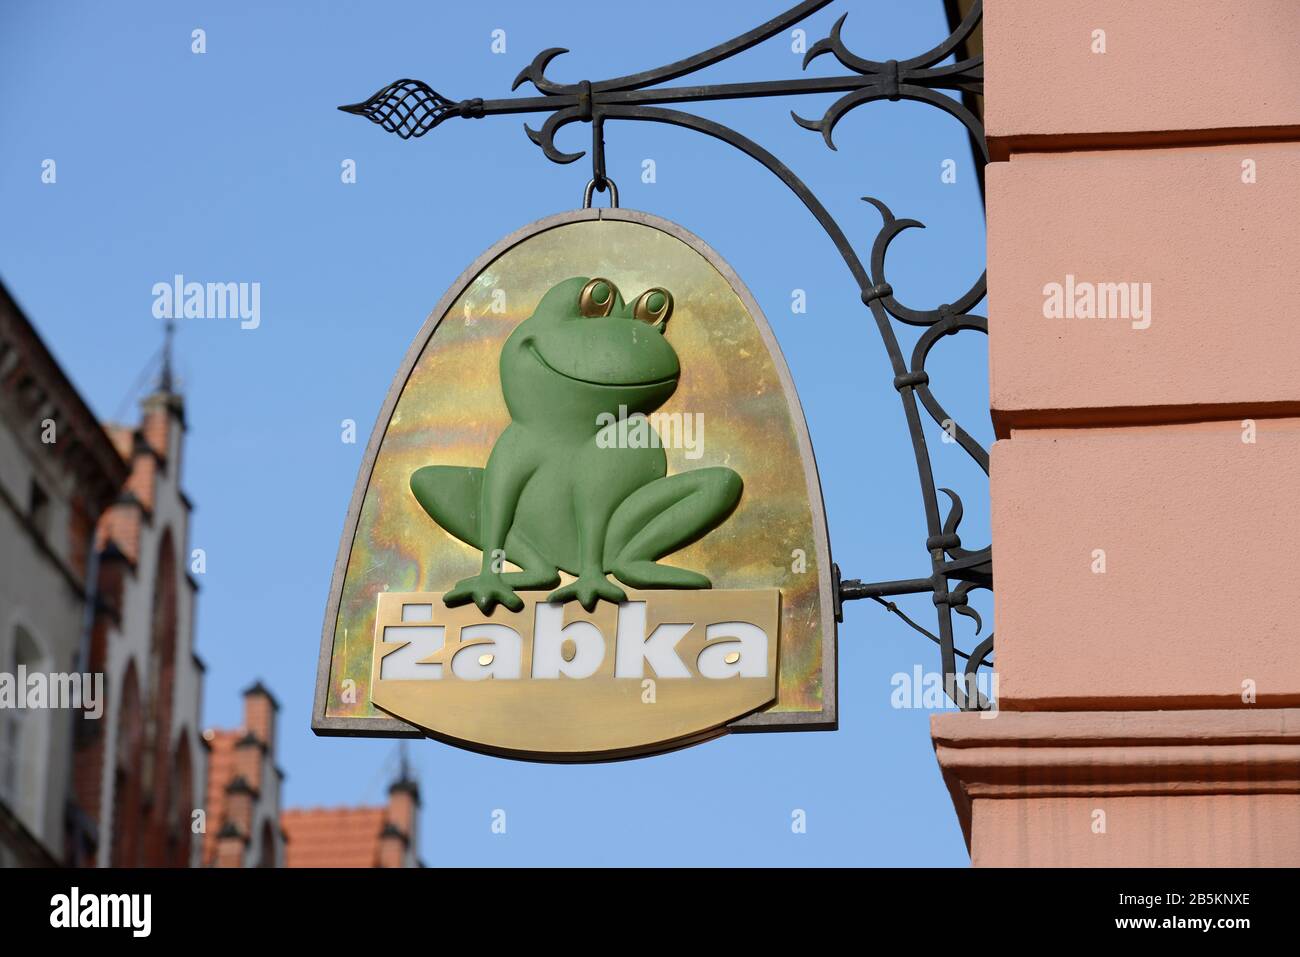 Werbeschild, Zabka Lebensmittel, Altstadt, Breslau, Niederschlesien, Polen Foto Stock